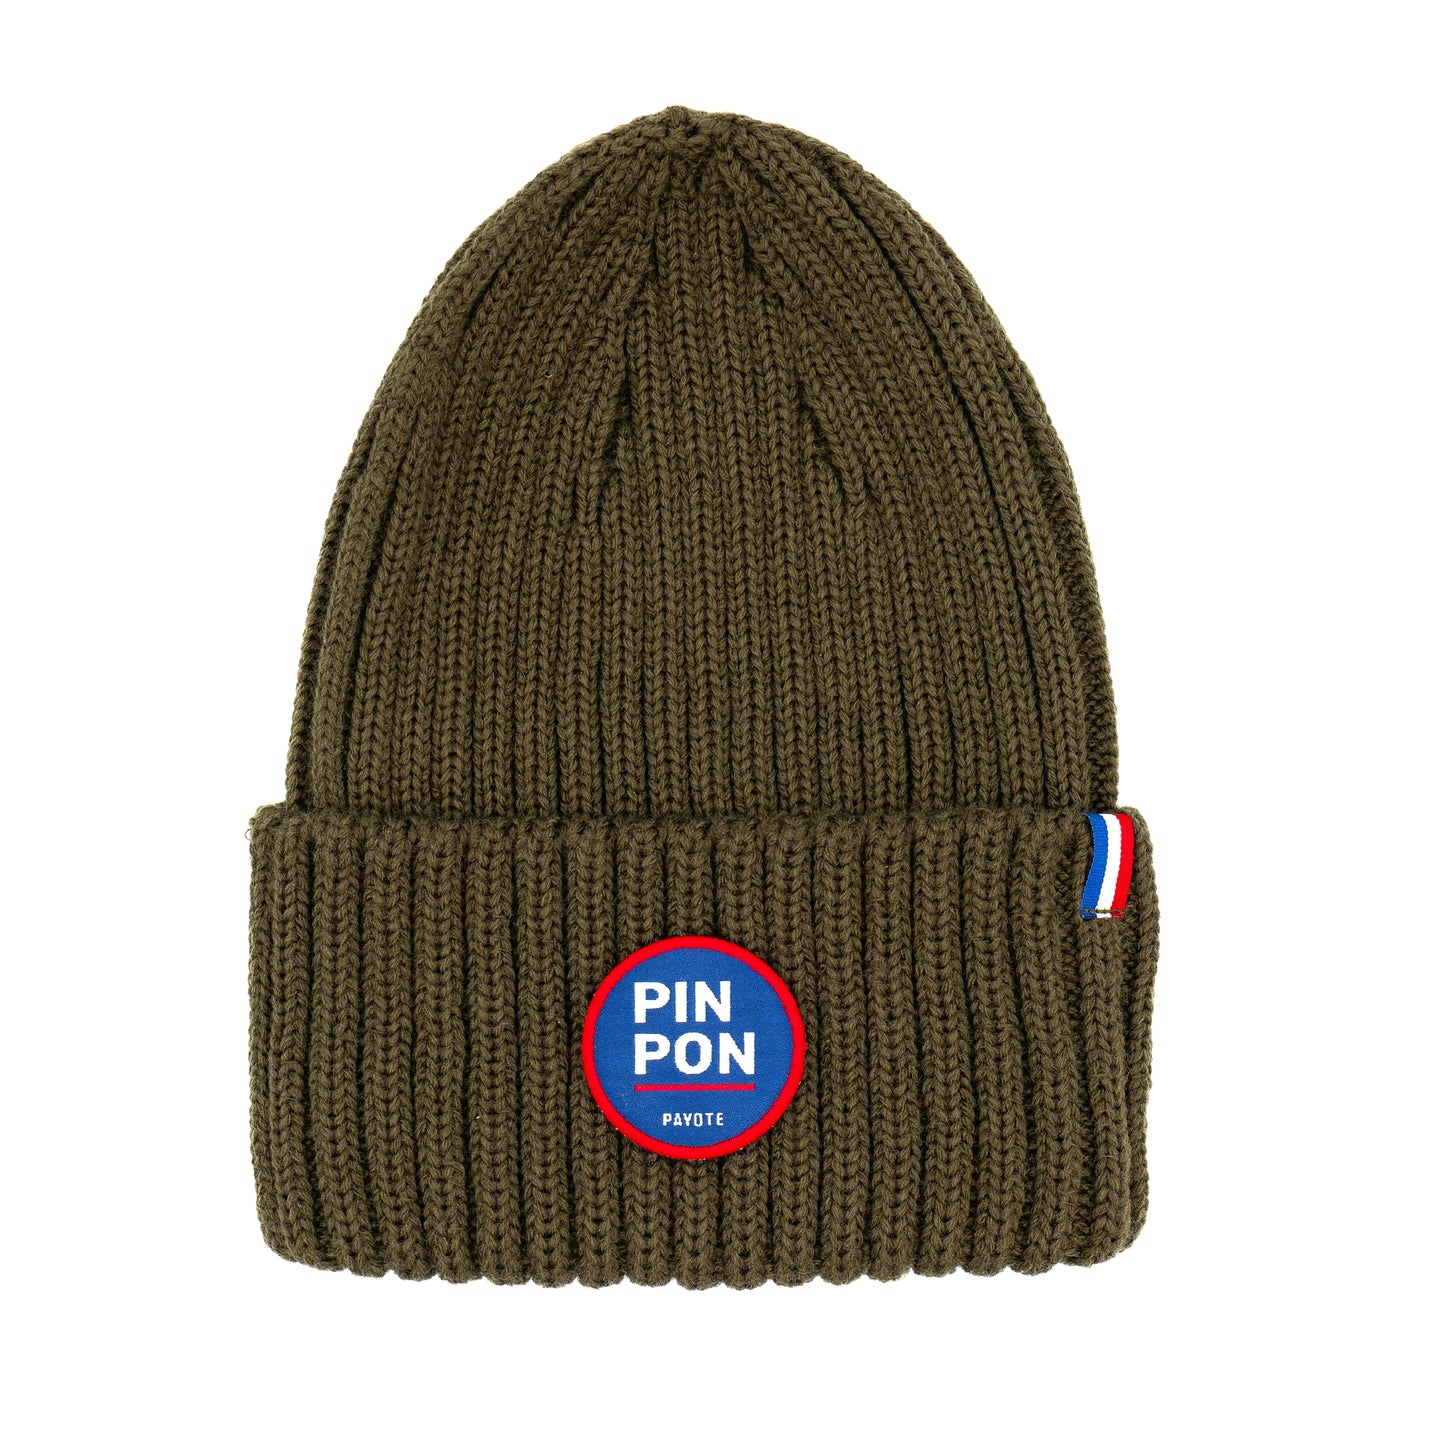 Bonnet solidaire Kaki Pin Pon